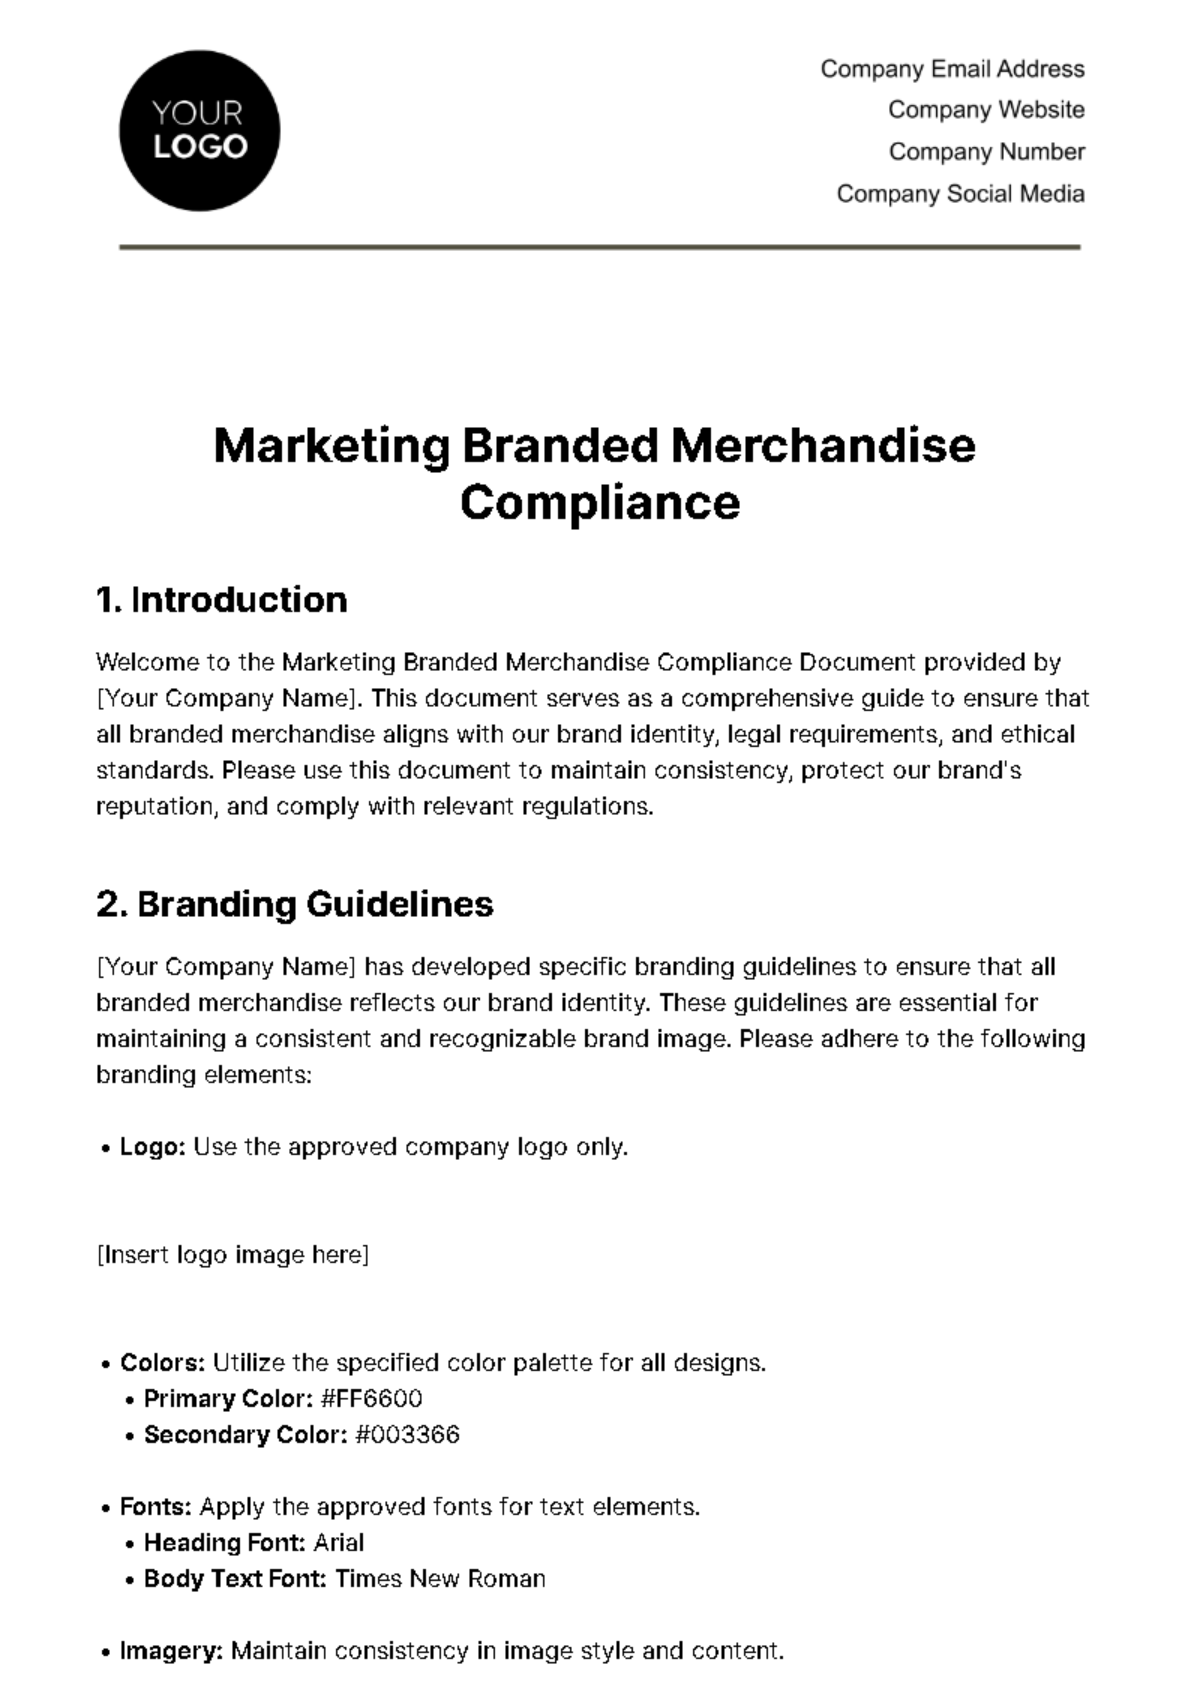 Marketing Branded Merchandise Compliance Template